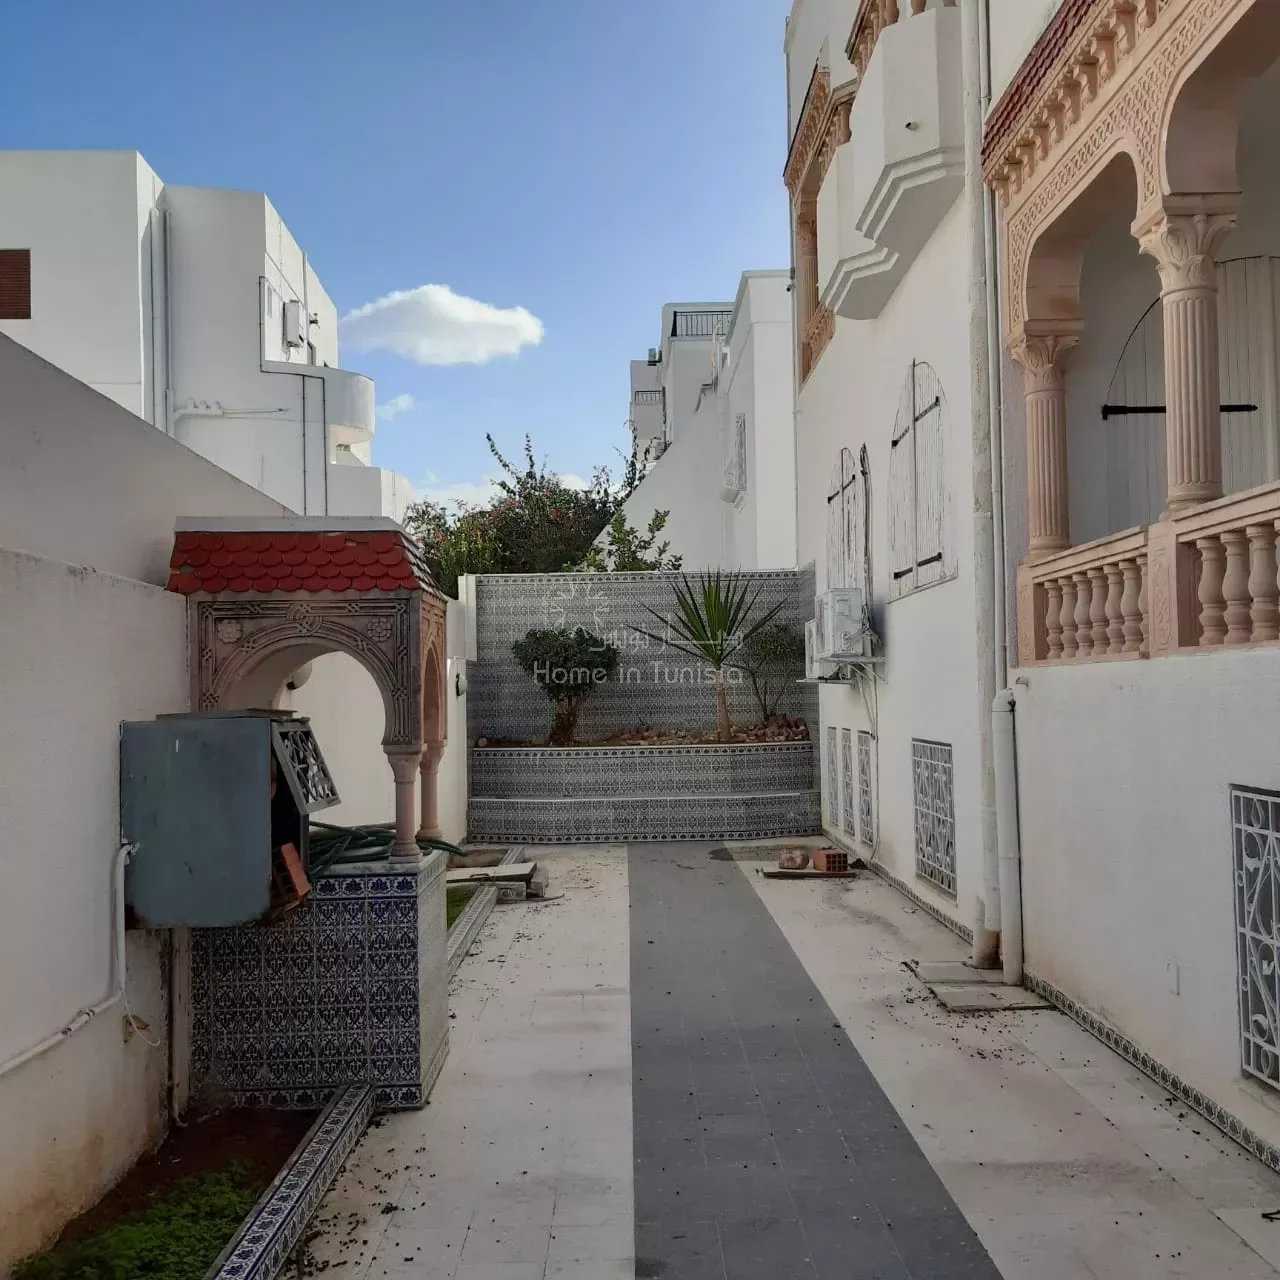 Seizoenverhuur Villa - El Kantaoui - Tunesië